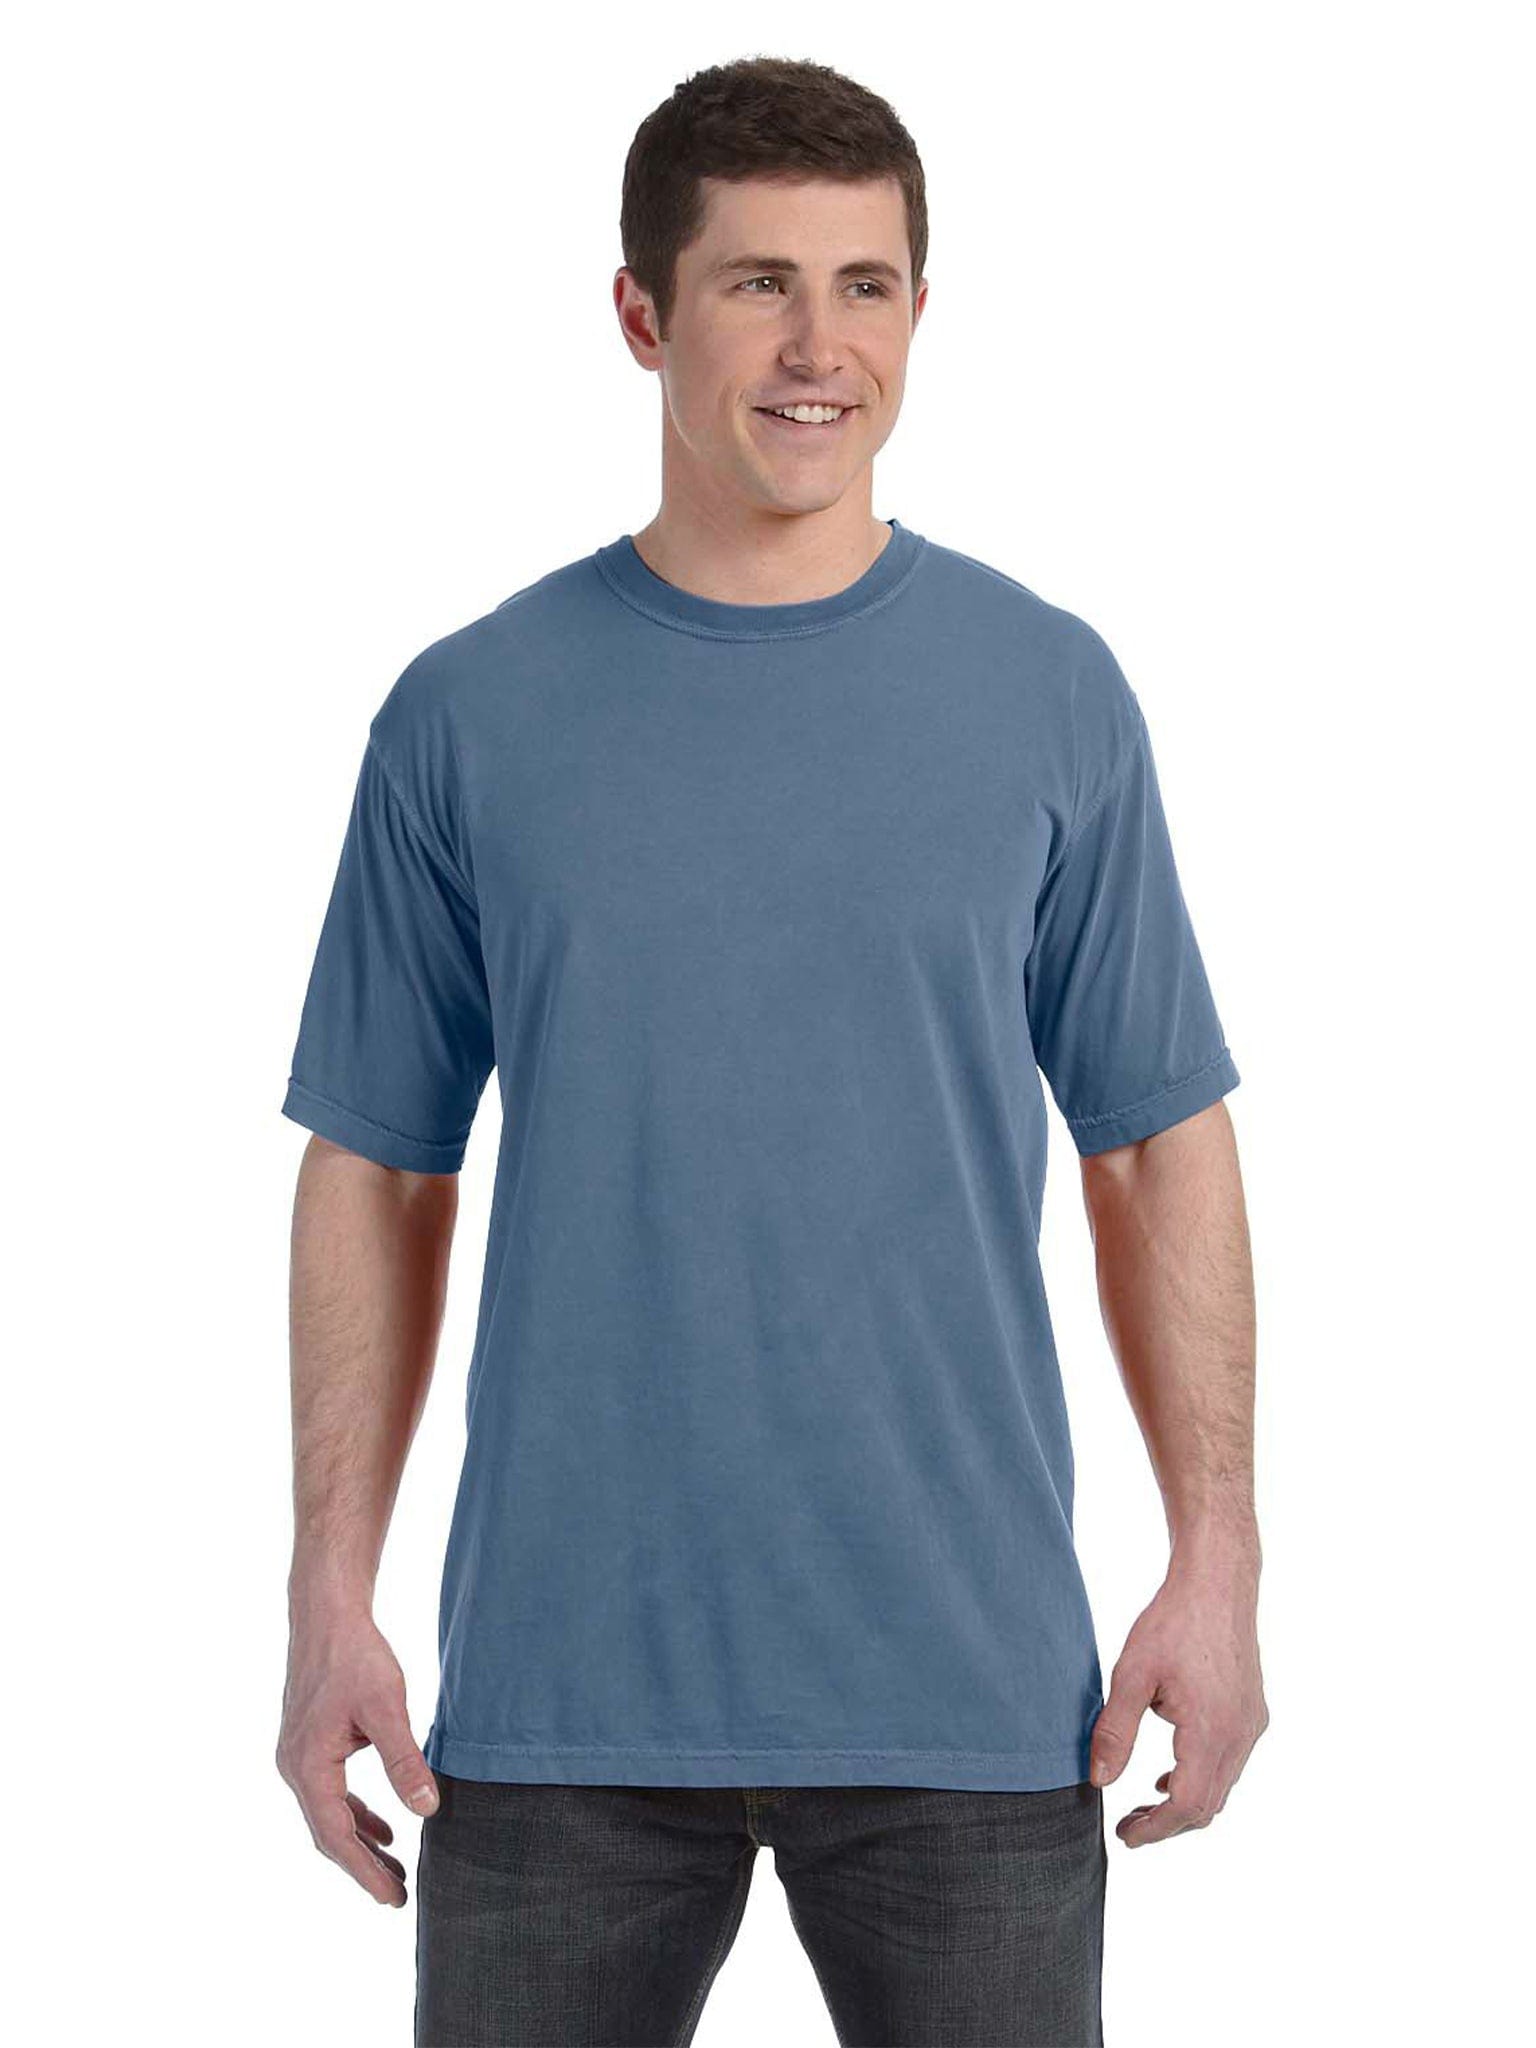 The Comfort Colors Adult Crewneck Sweatshirt - CHAMBRAY - M - Walmart.com